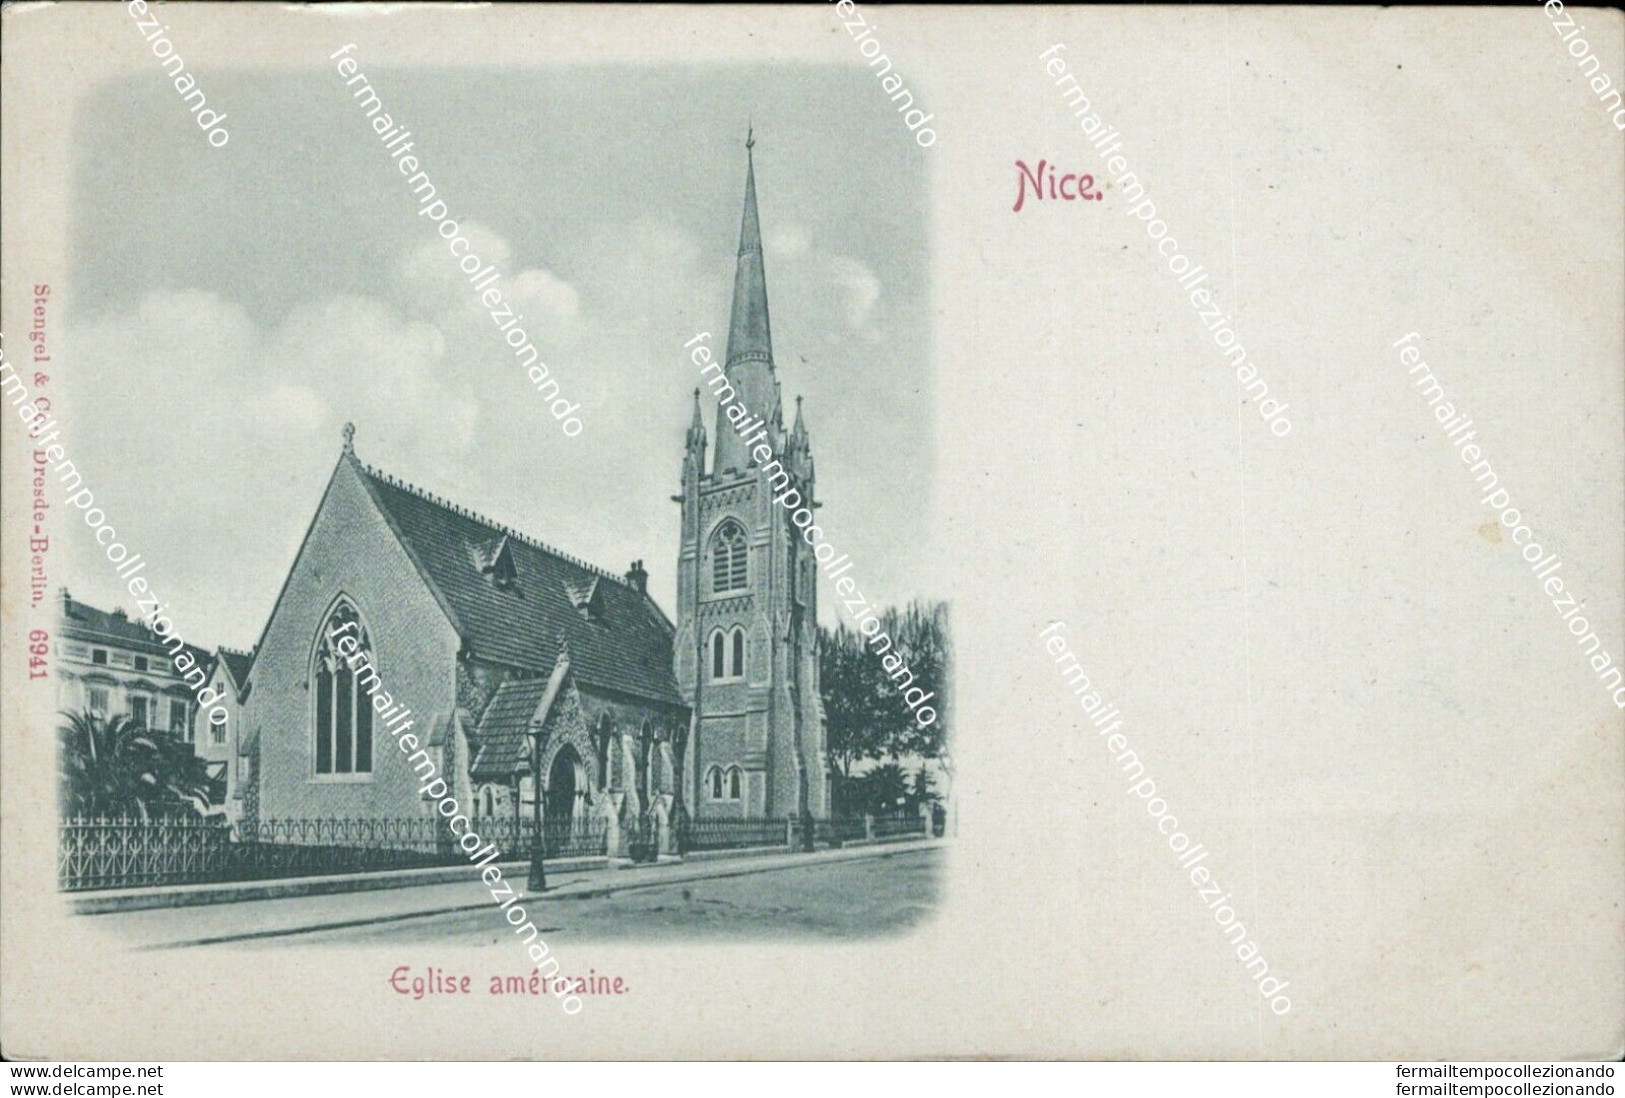 Bd78 Cartolina Nice Eglise Americaine - Bauwerke, Gebäude